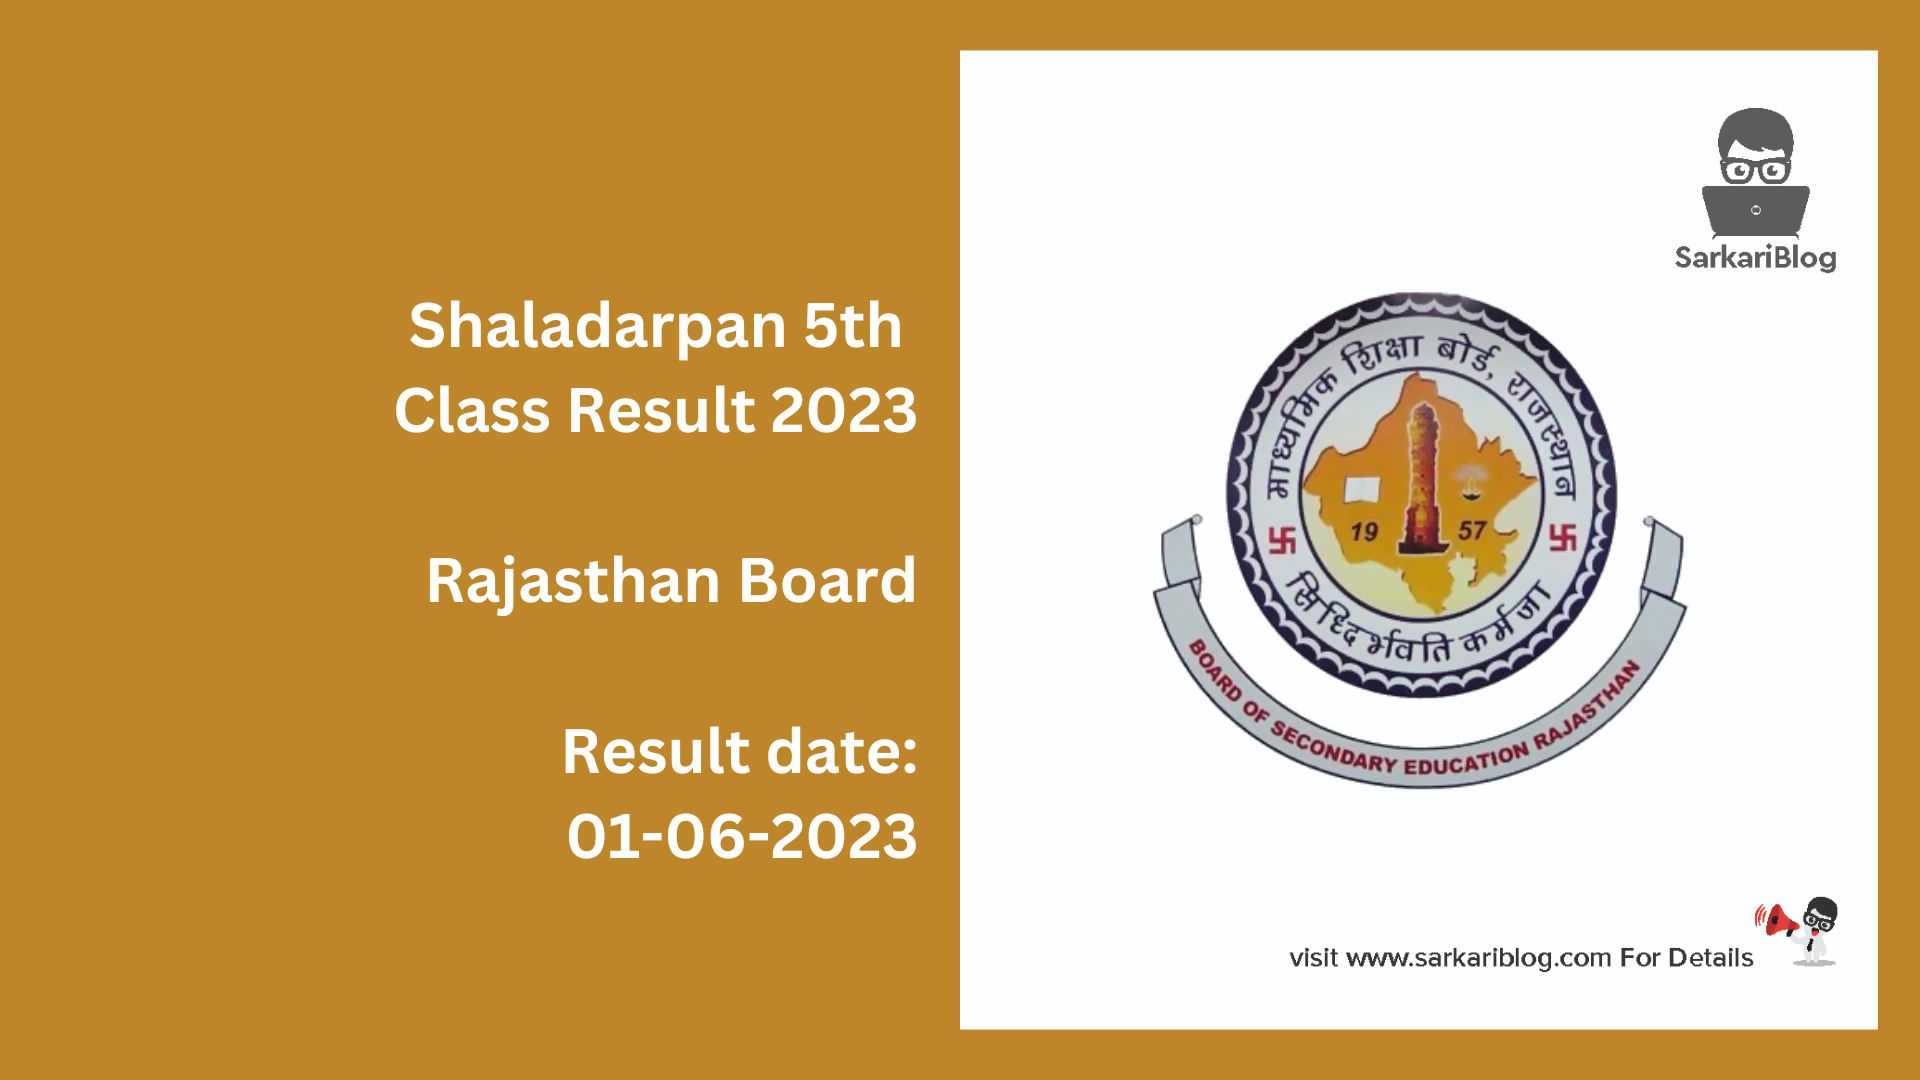 Shaladarpan 5th Class Result 2023